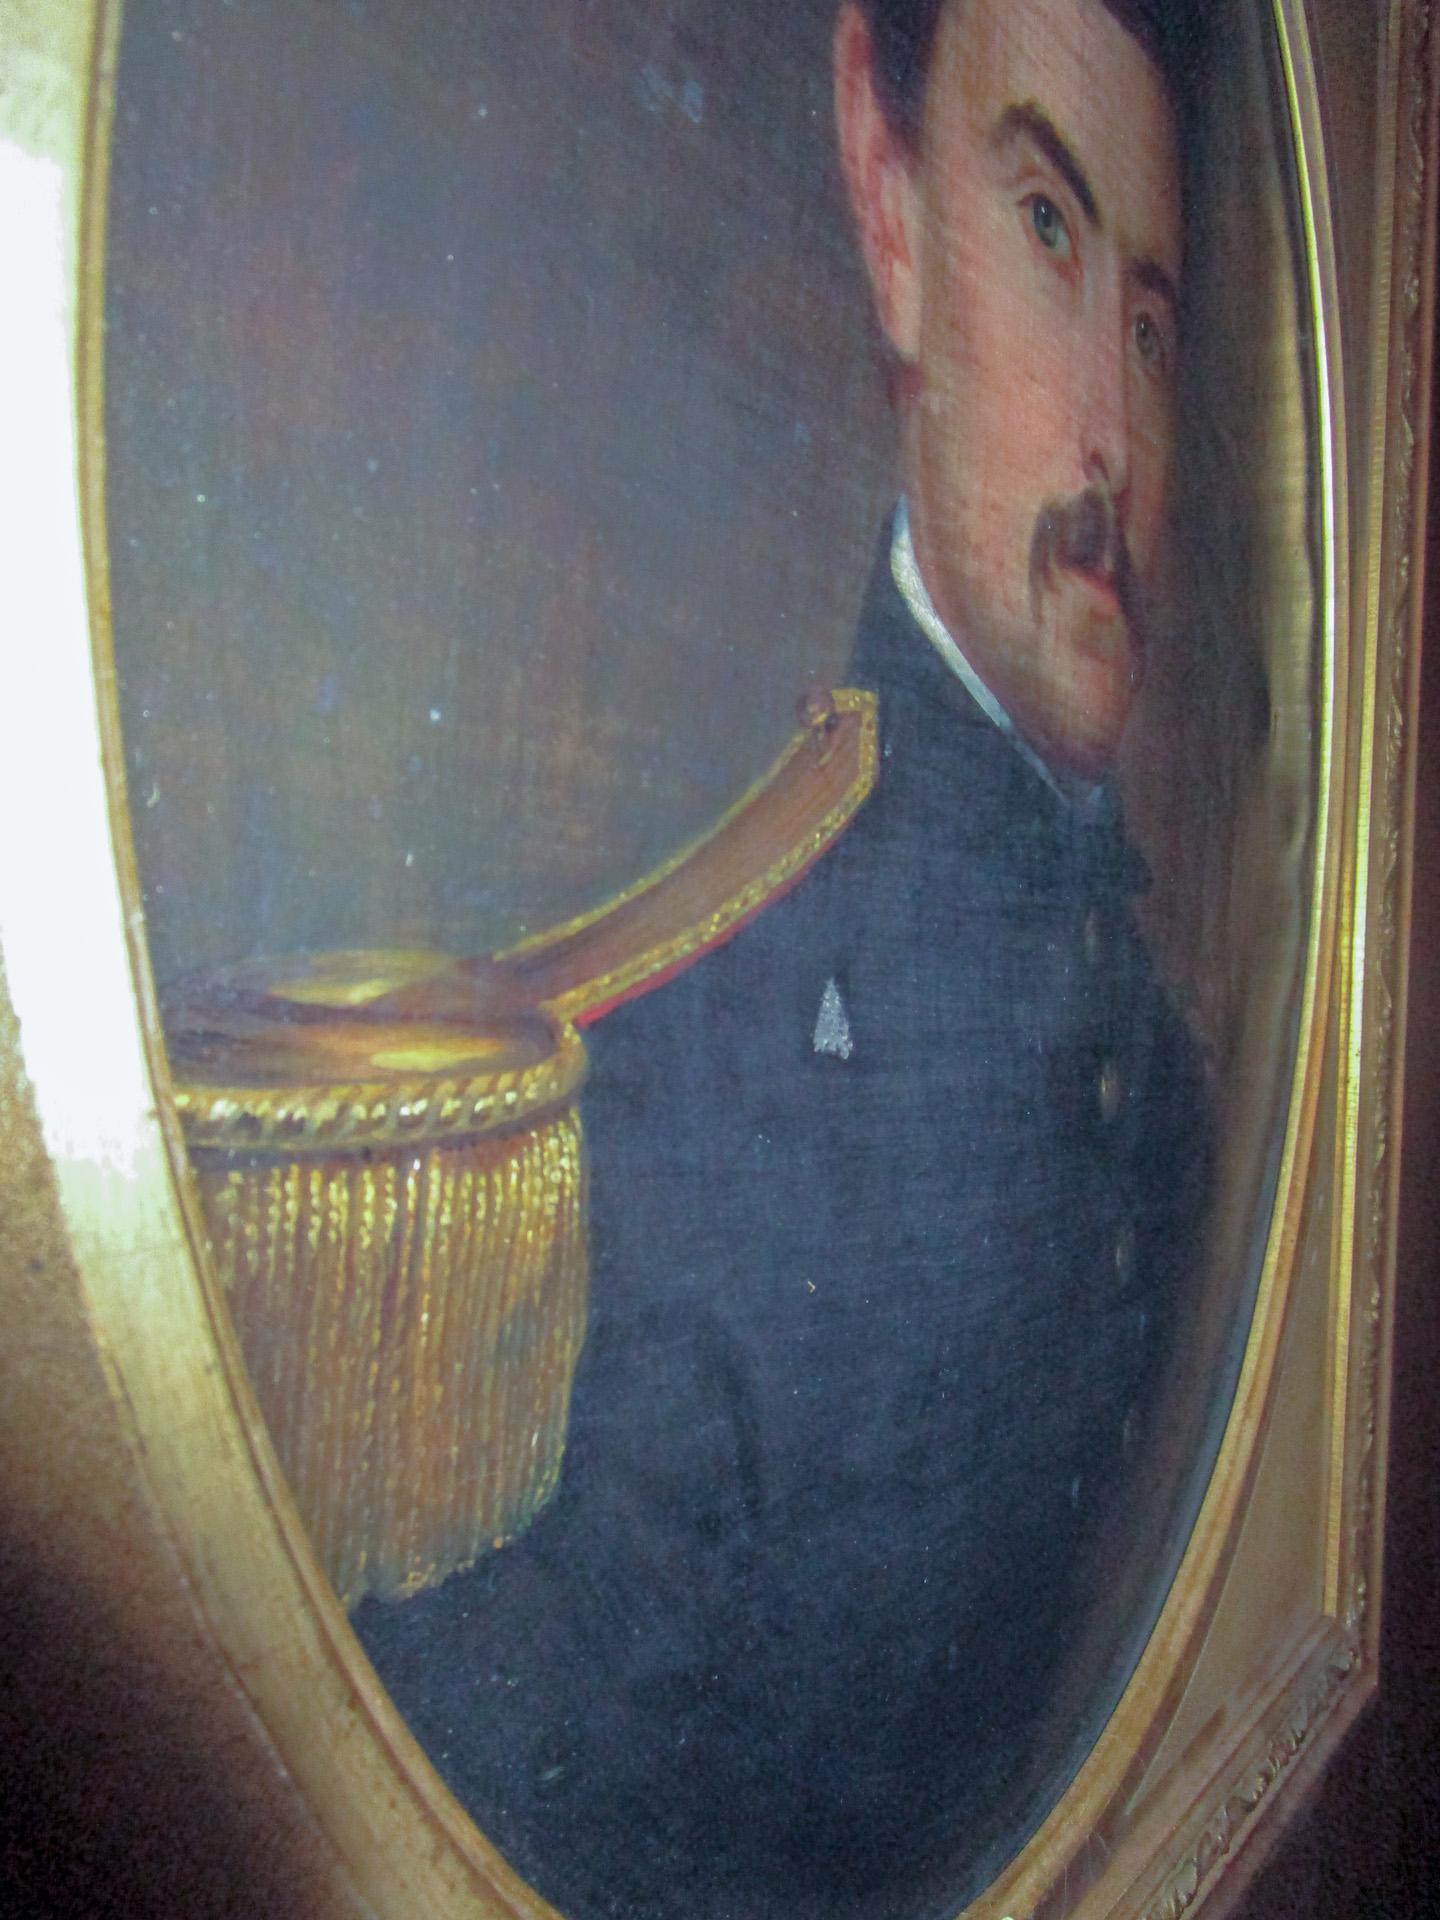 19th century American Civil War Union Army Officer Framed Portrait Oil on Canvas 4